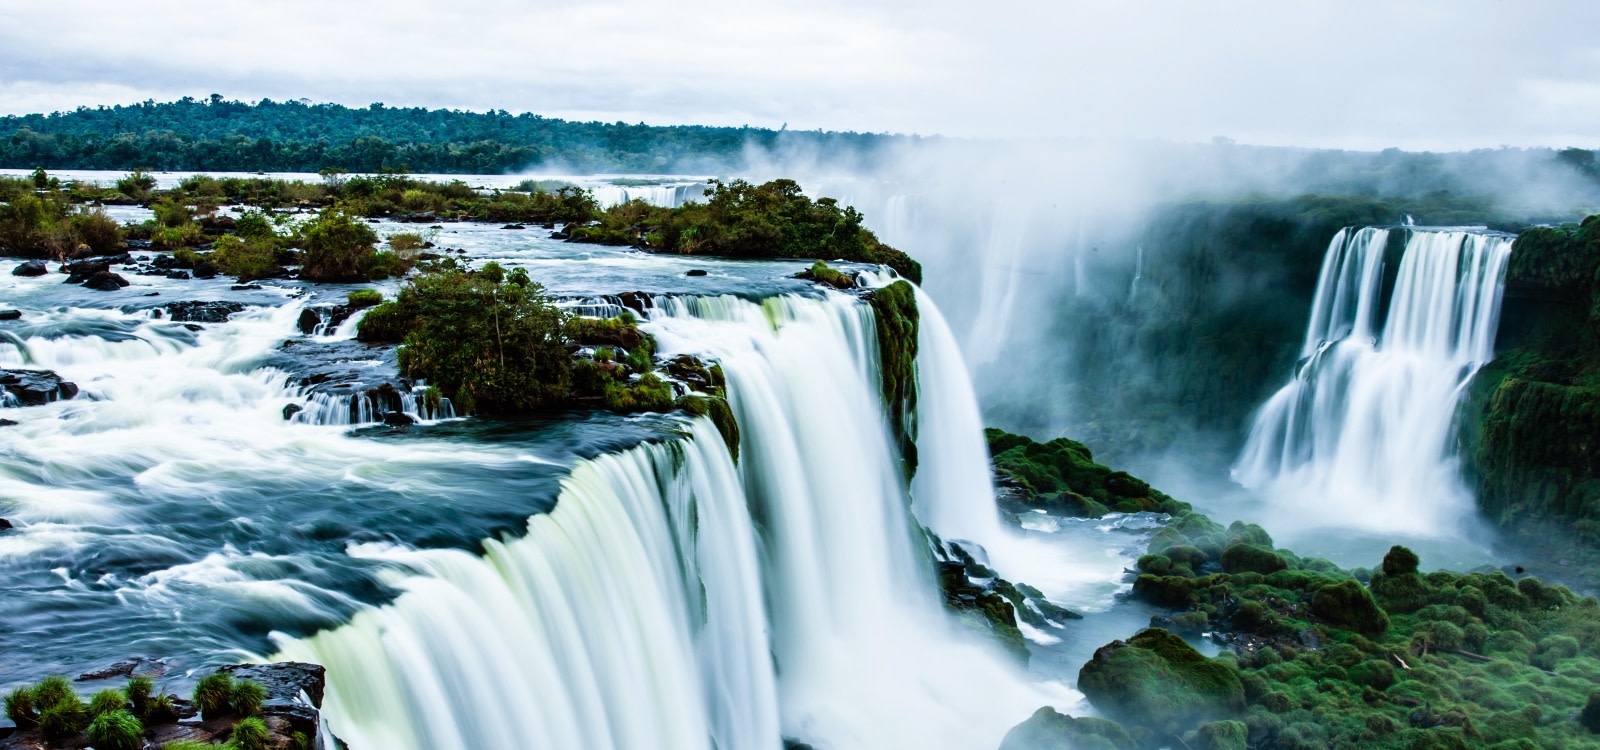 Iguazú Falls - The World's Largest Waterfalls | Argentina Tour